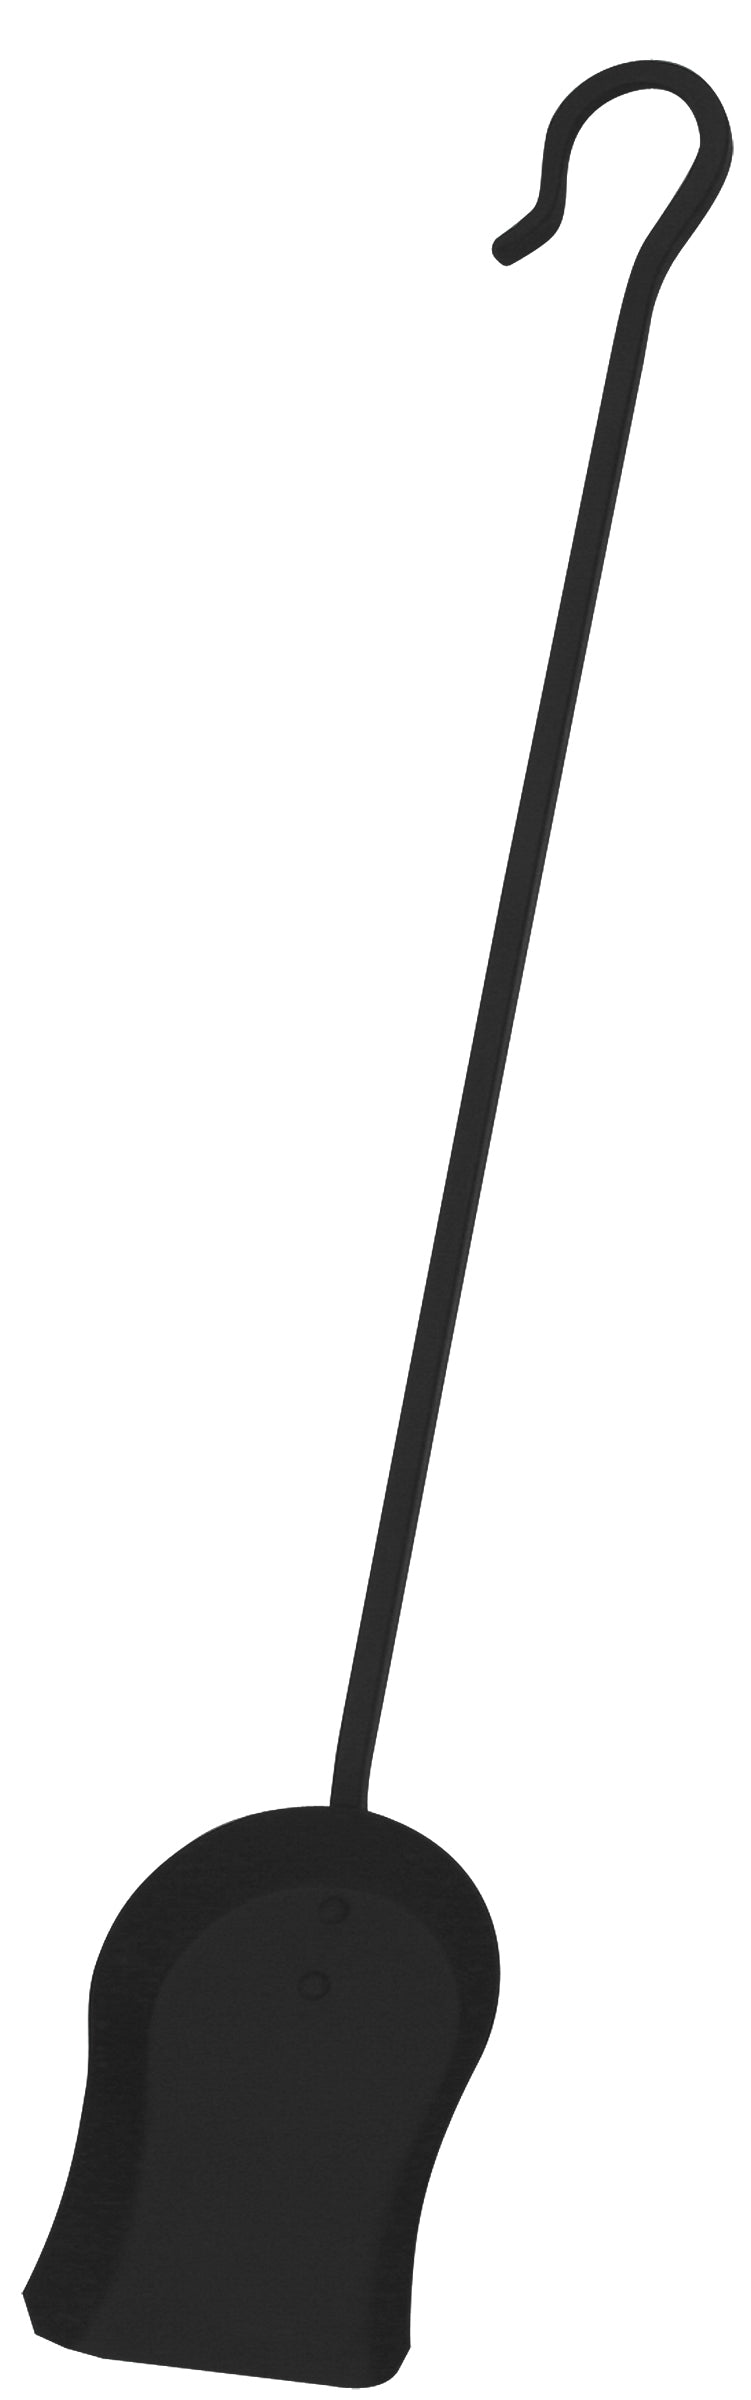 UniFlame Black Finish Shovel with Crook Handle